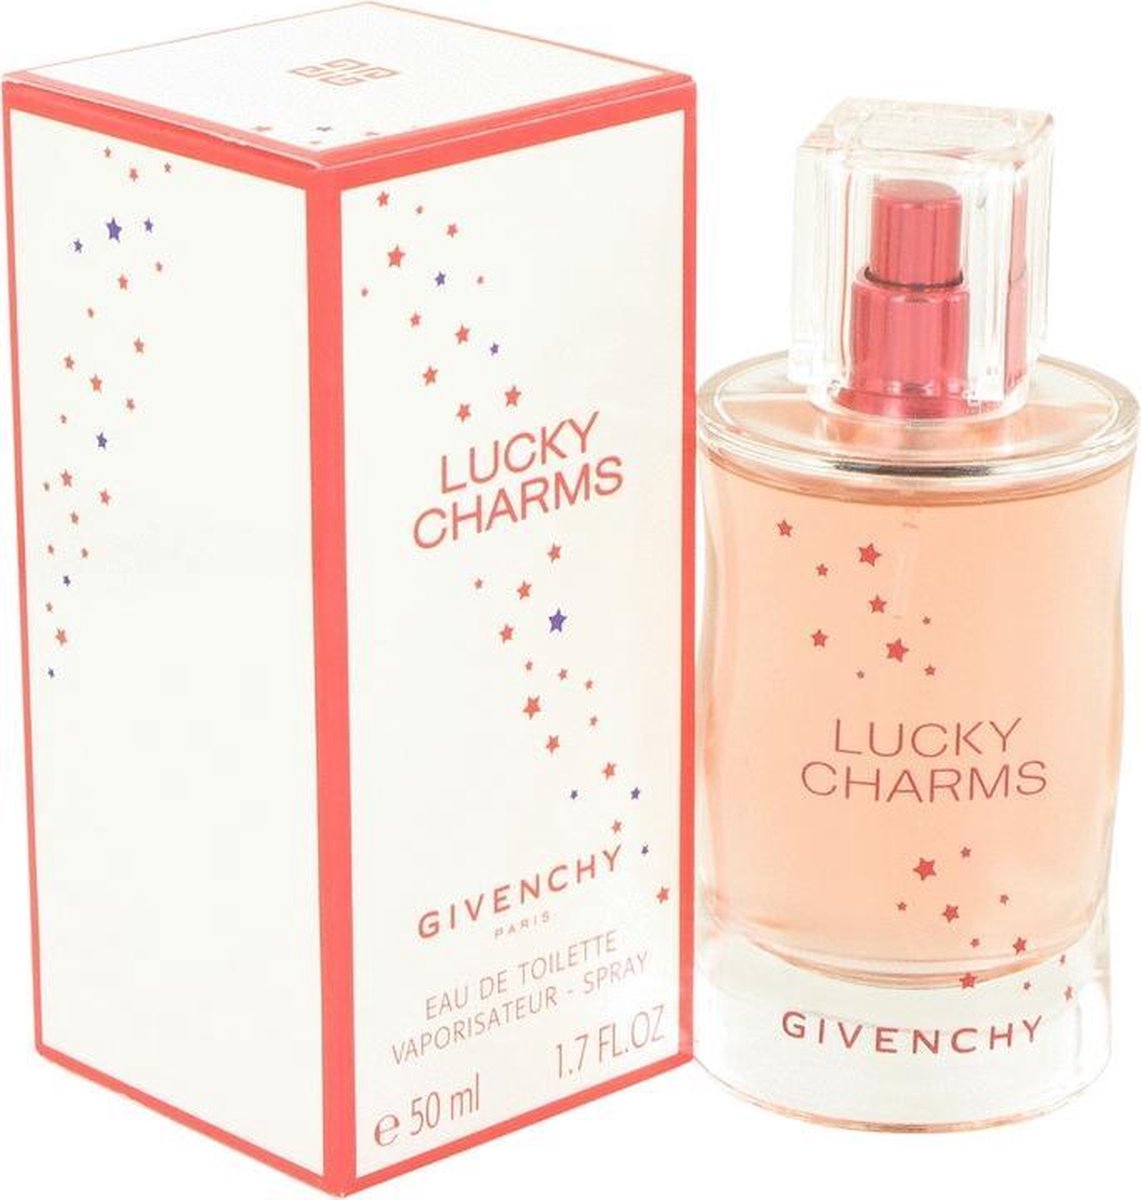 Givenchy Lucky Charms eau de toilette spray 50 ml